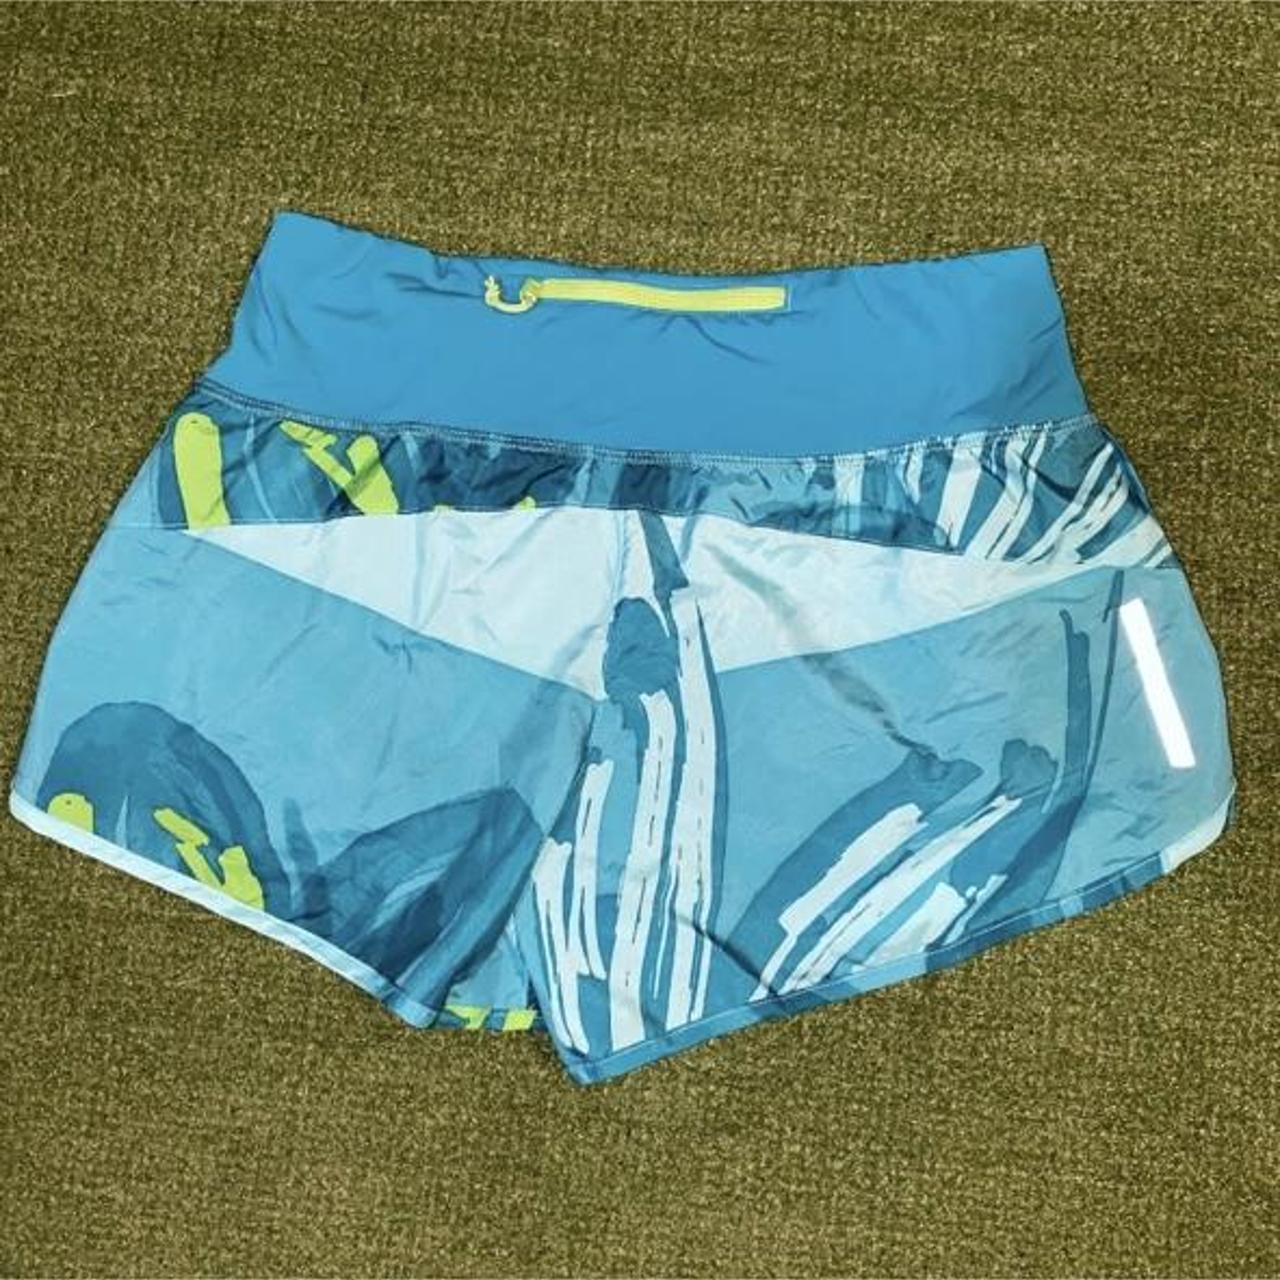 Salomon Advanced Skin Active Dry Teal Blue Running Shorts Built In Underwear  XS